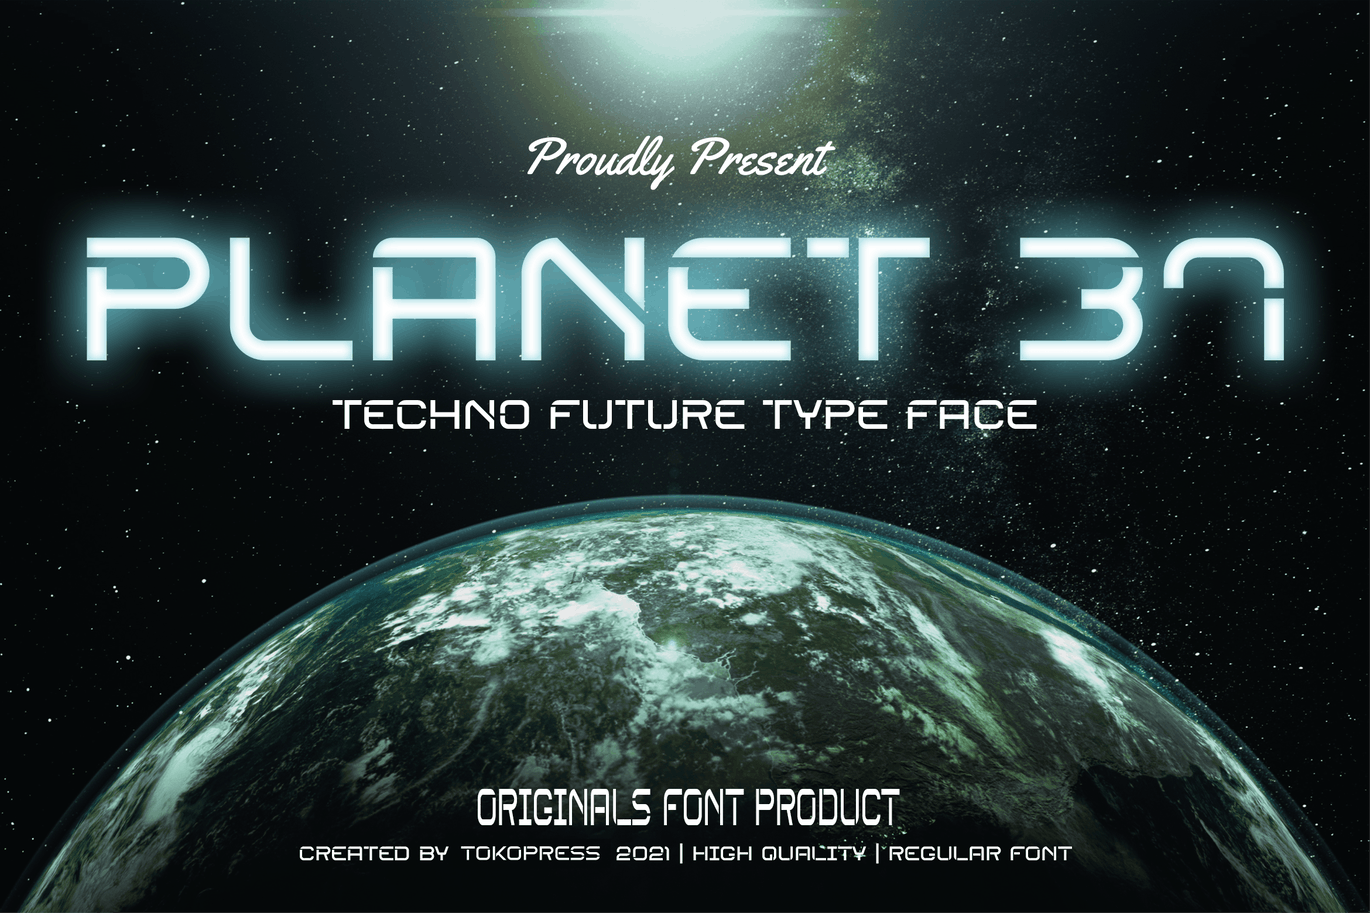 Planet 37